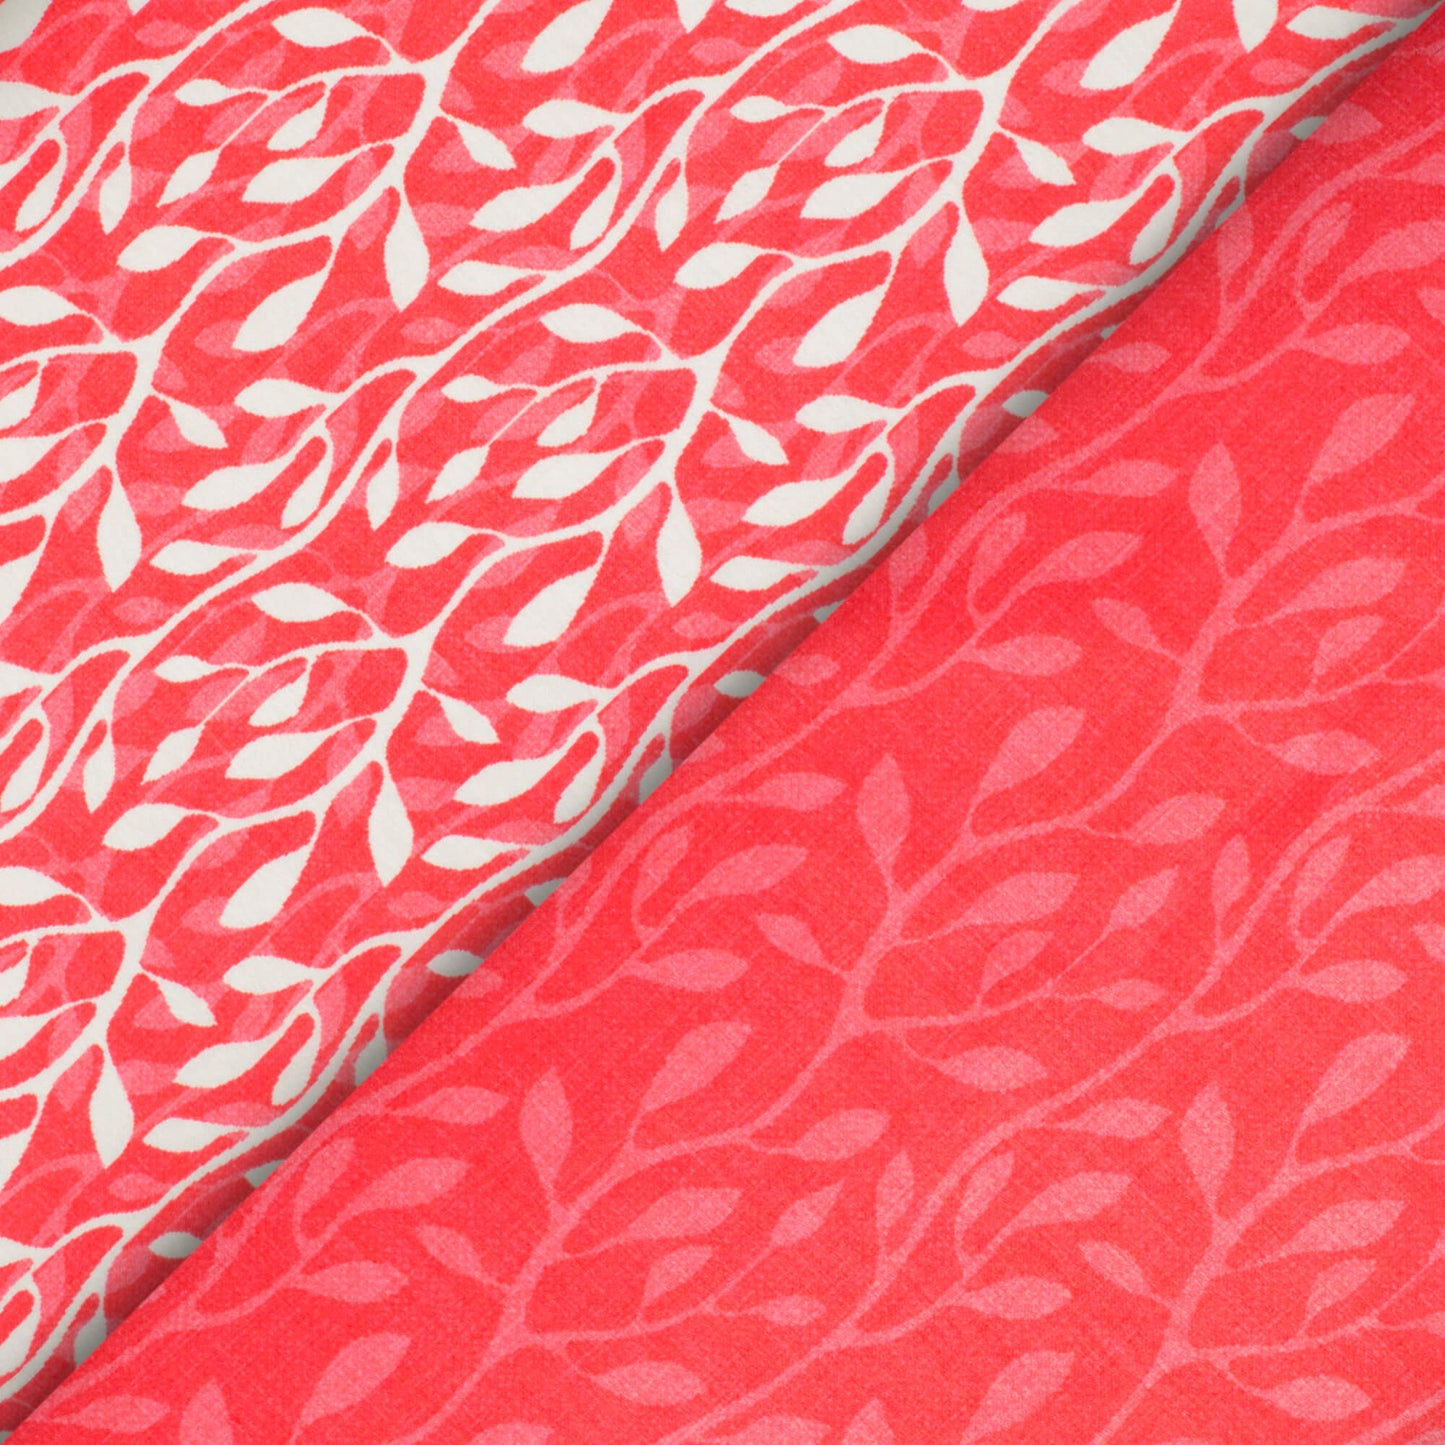 Desire Red Leaf Pattern Digital Print Lush Satin Fabric